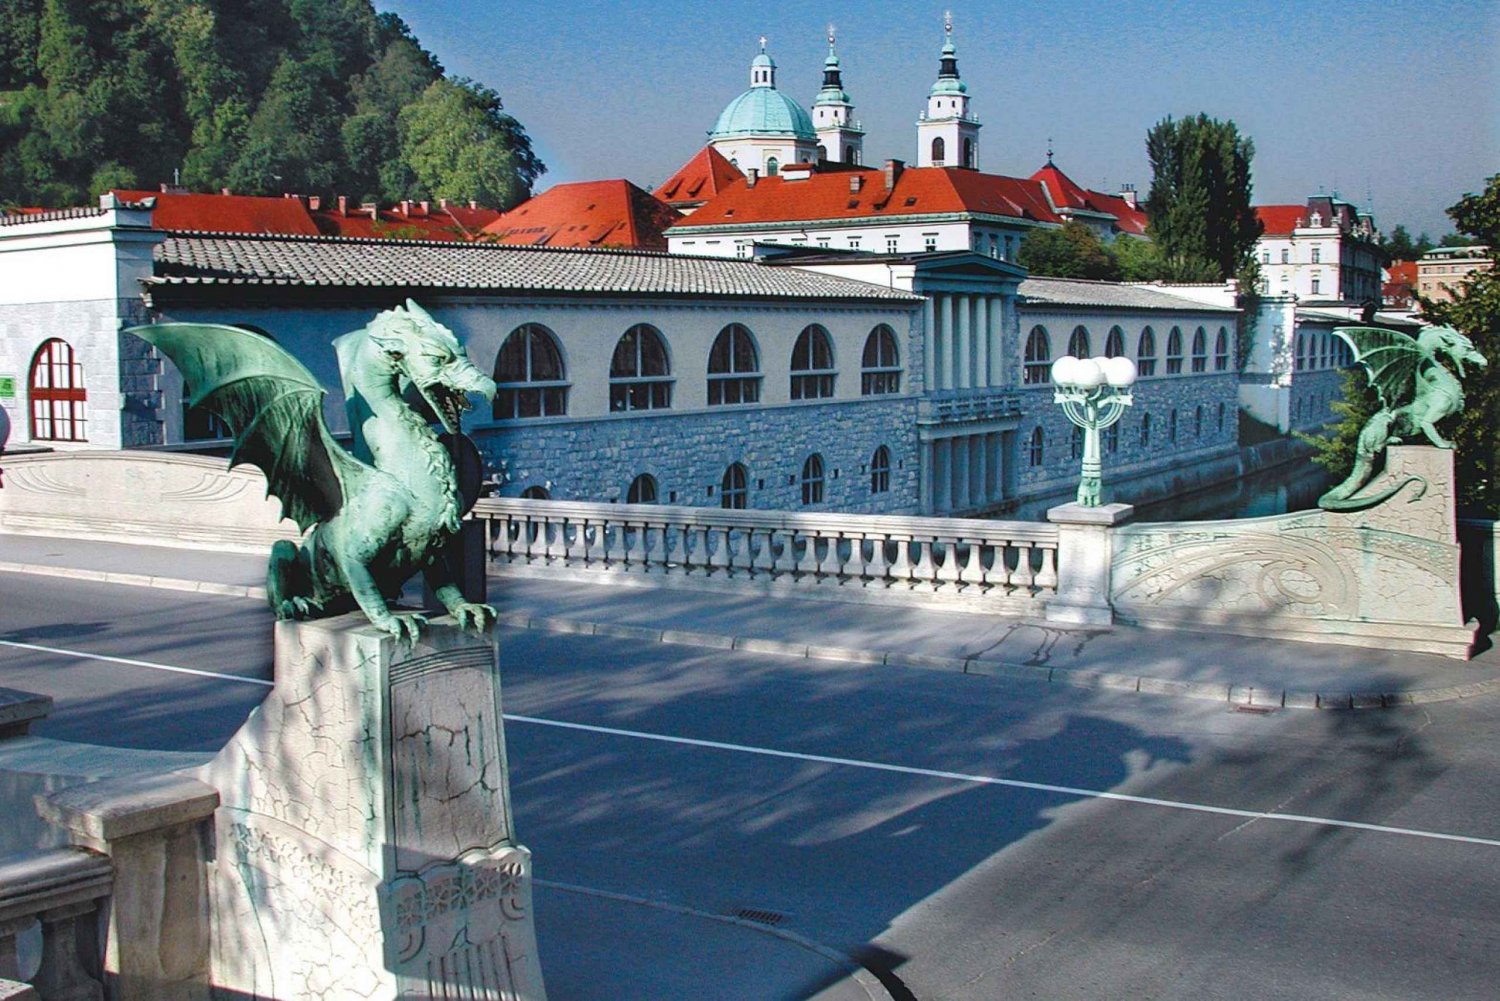 Ljubljana walking tour with an art historian & tour guide